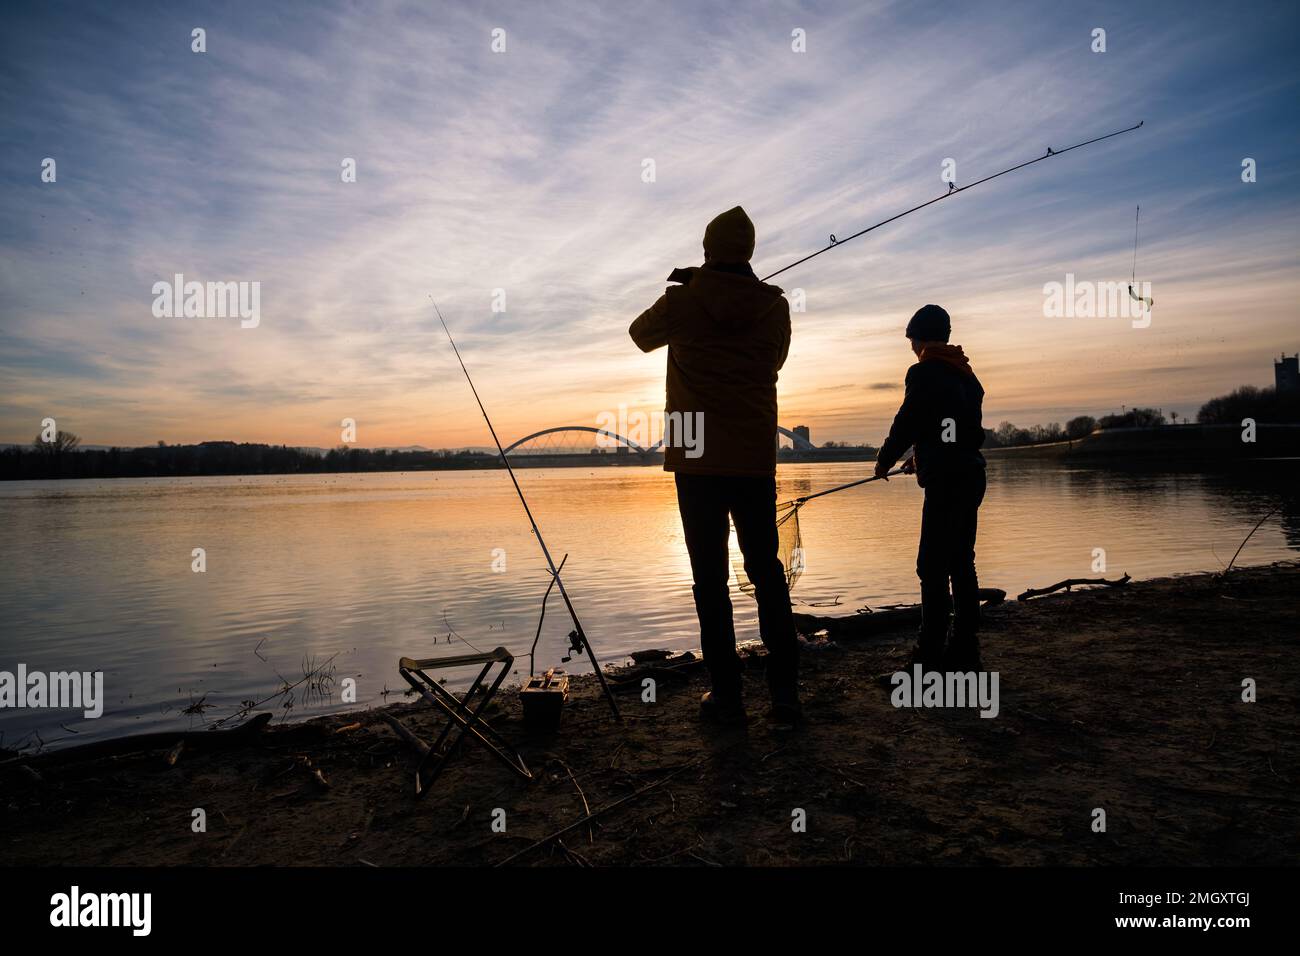 https://c8.alamy.com/comp/2MGXTGJ/teenage-boy-is-fishing-on-river-bank-boy-is-fishing-in-sunset-2MGXTGJ.jpg